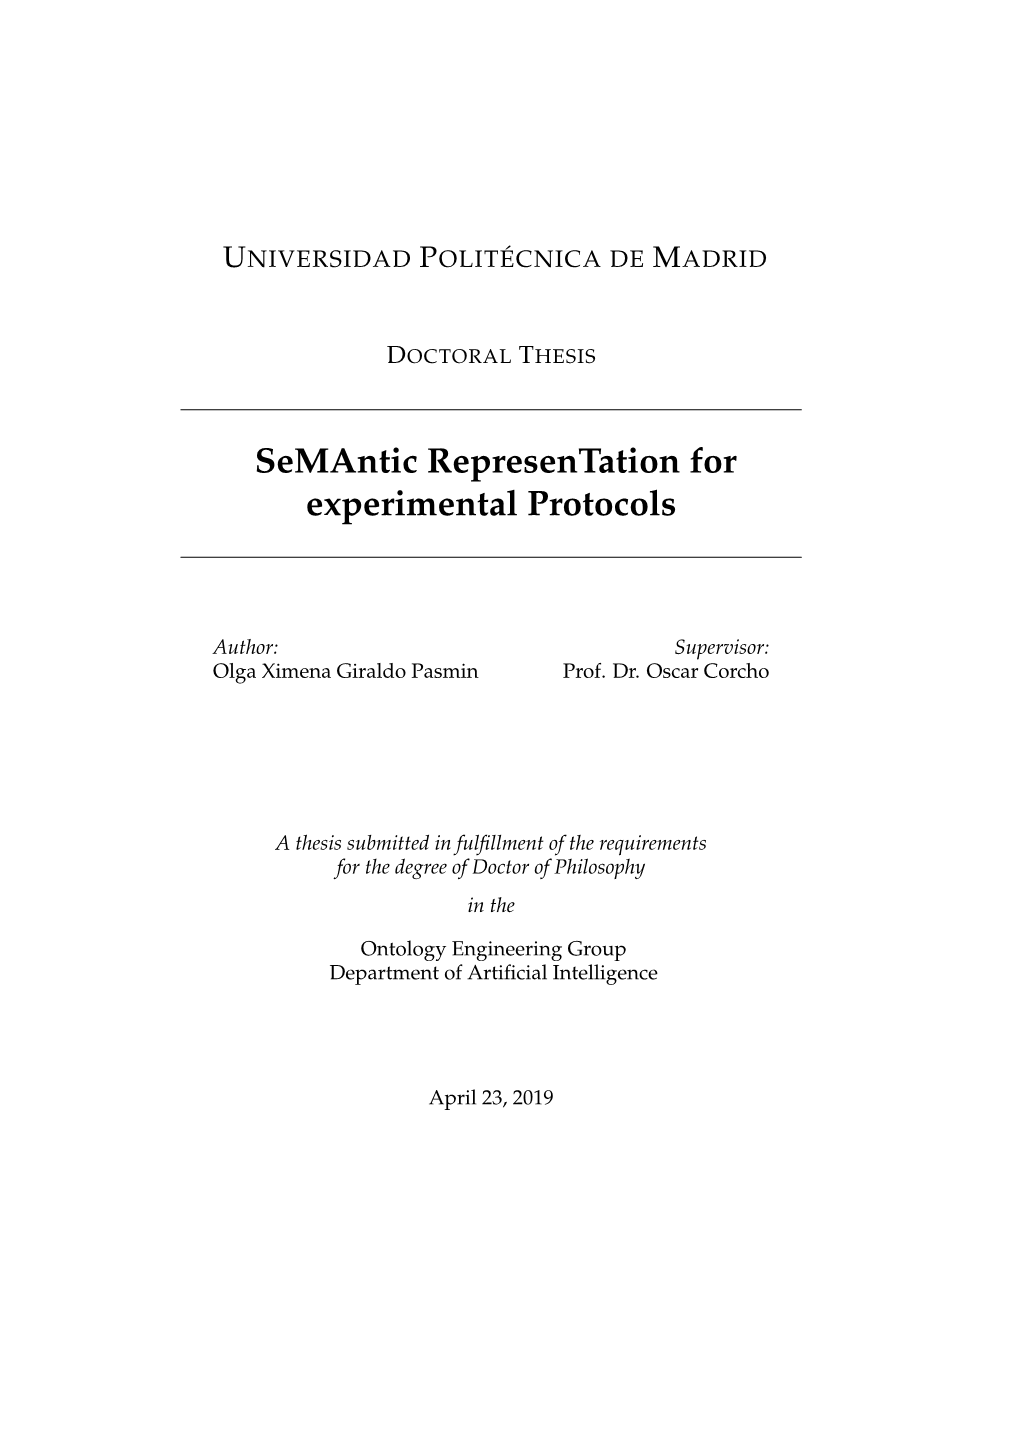 Semantic Representation for Experimental Protocols